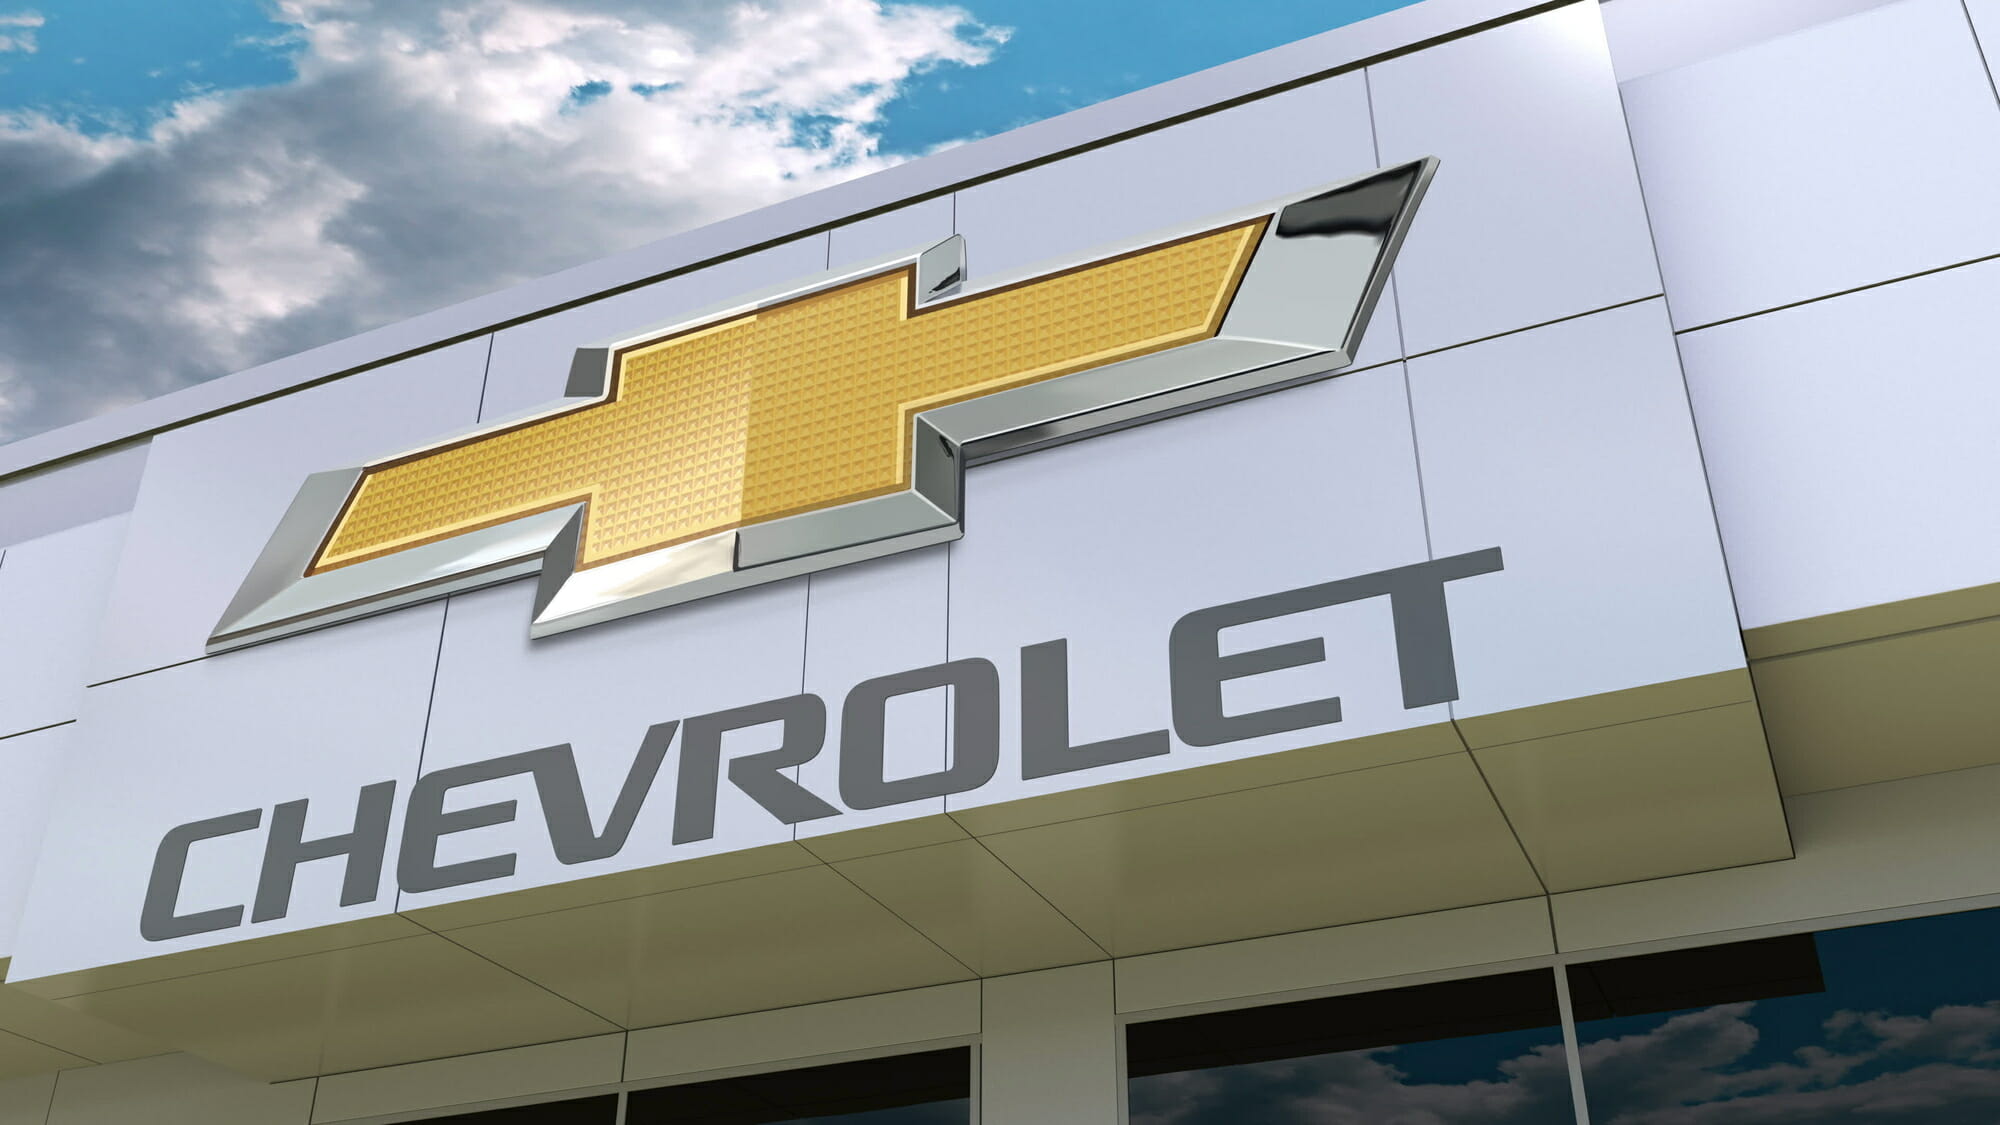 Chevrolet logo on the modern building facade. Editorial 3D rendering